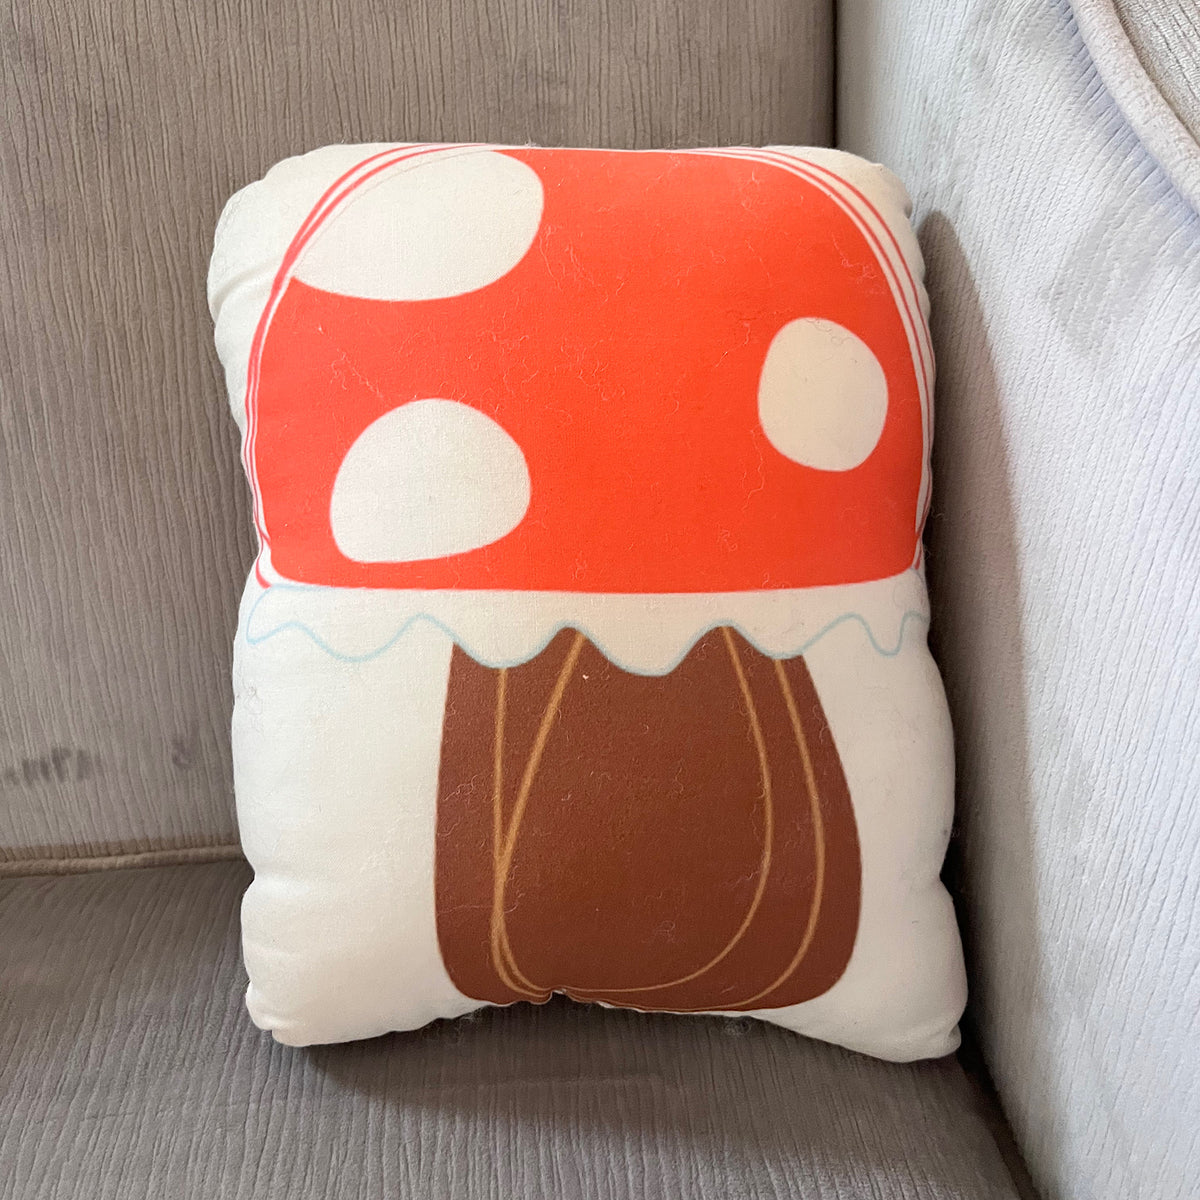 Mushroom Pillow